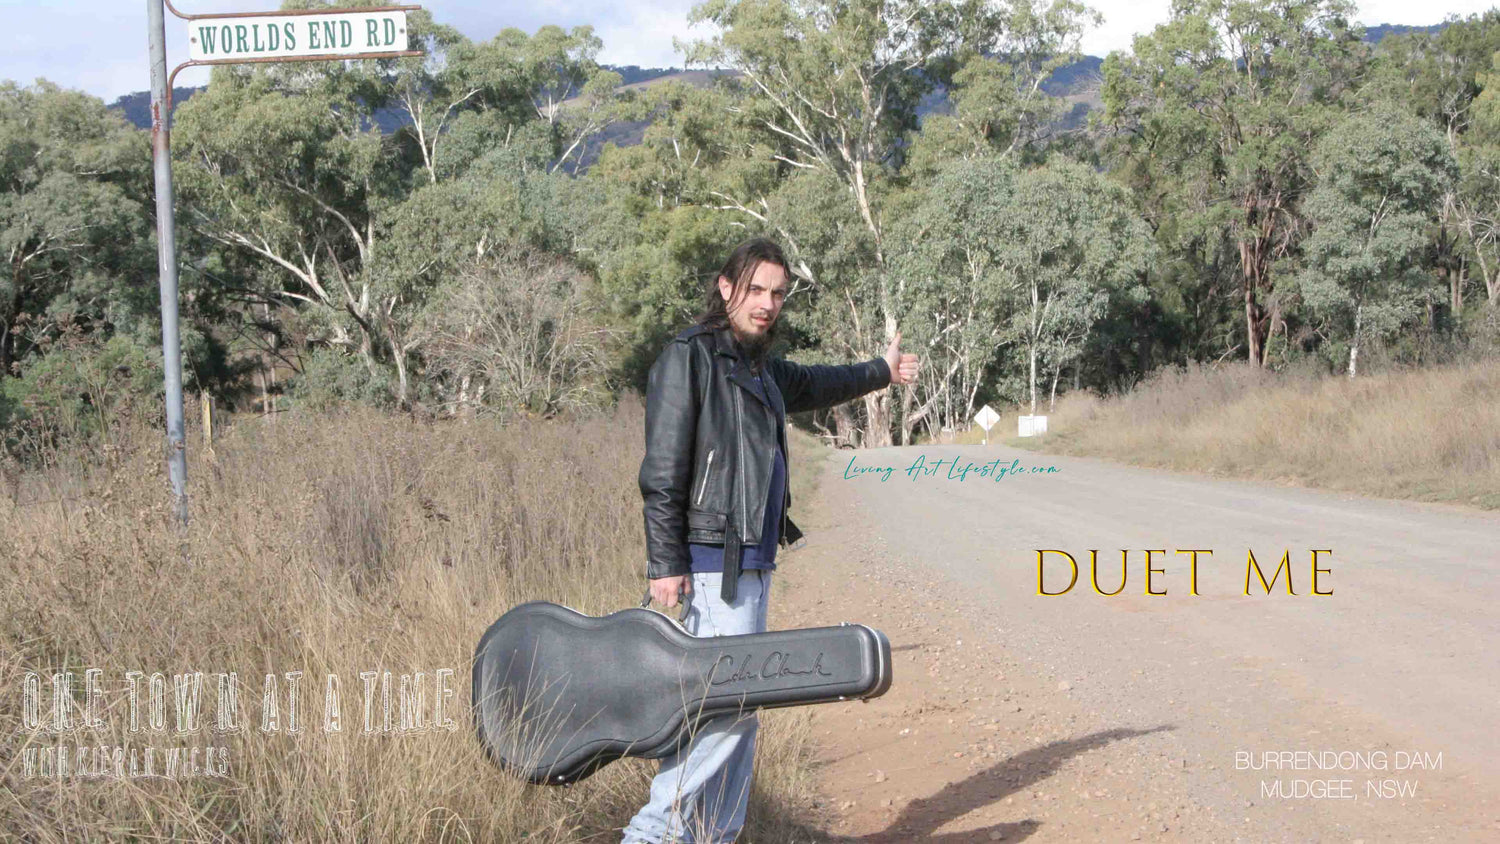 Kieran Wicks Hunter & King Album Cover - Hitchhiking down Dirt road raod sign worl'd end road Burrendong Dam near Mudgee Mid Western NSW